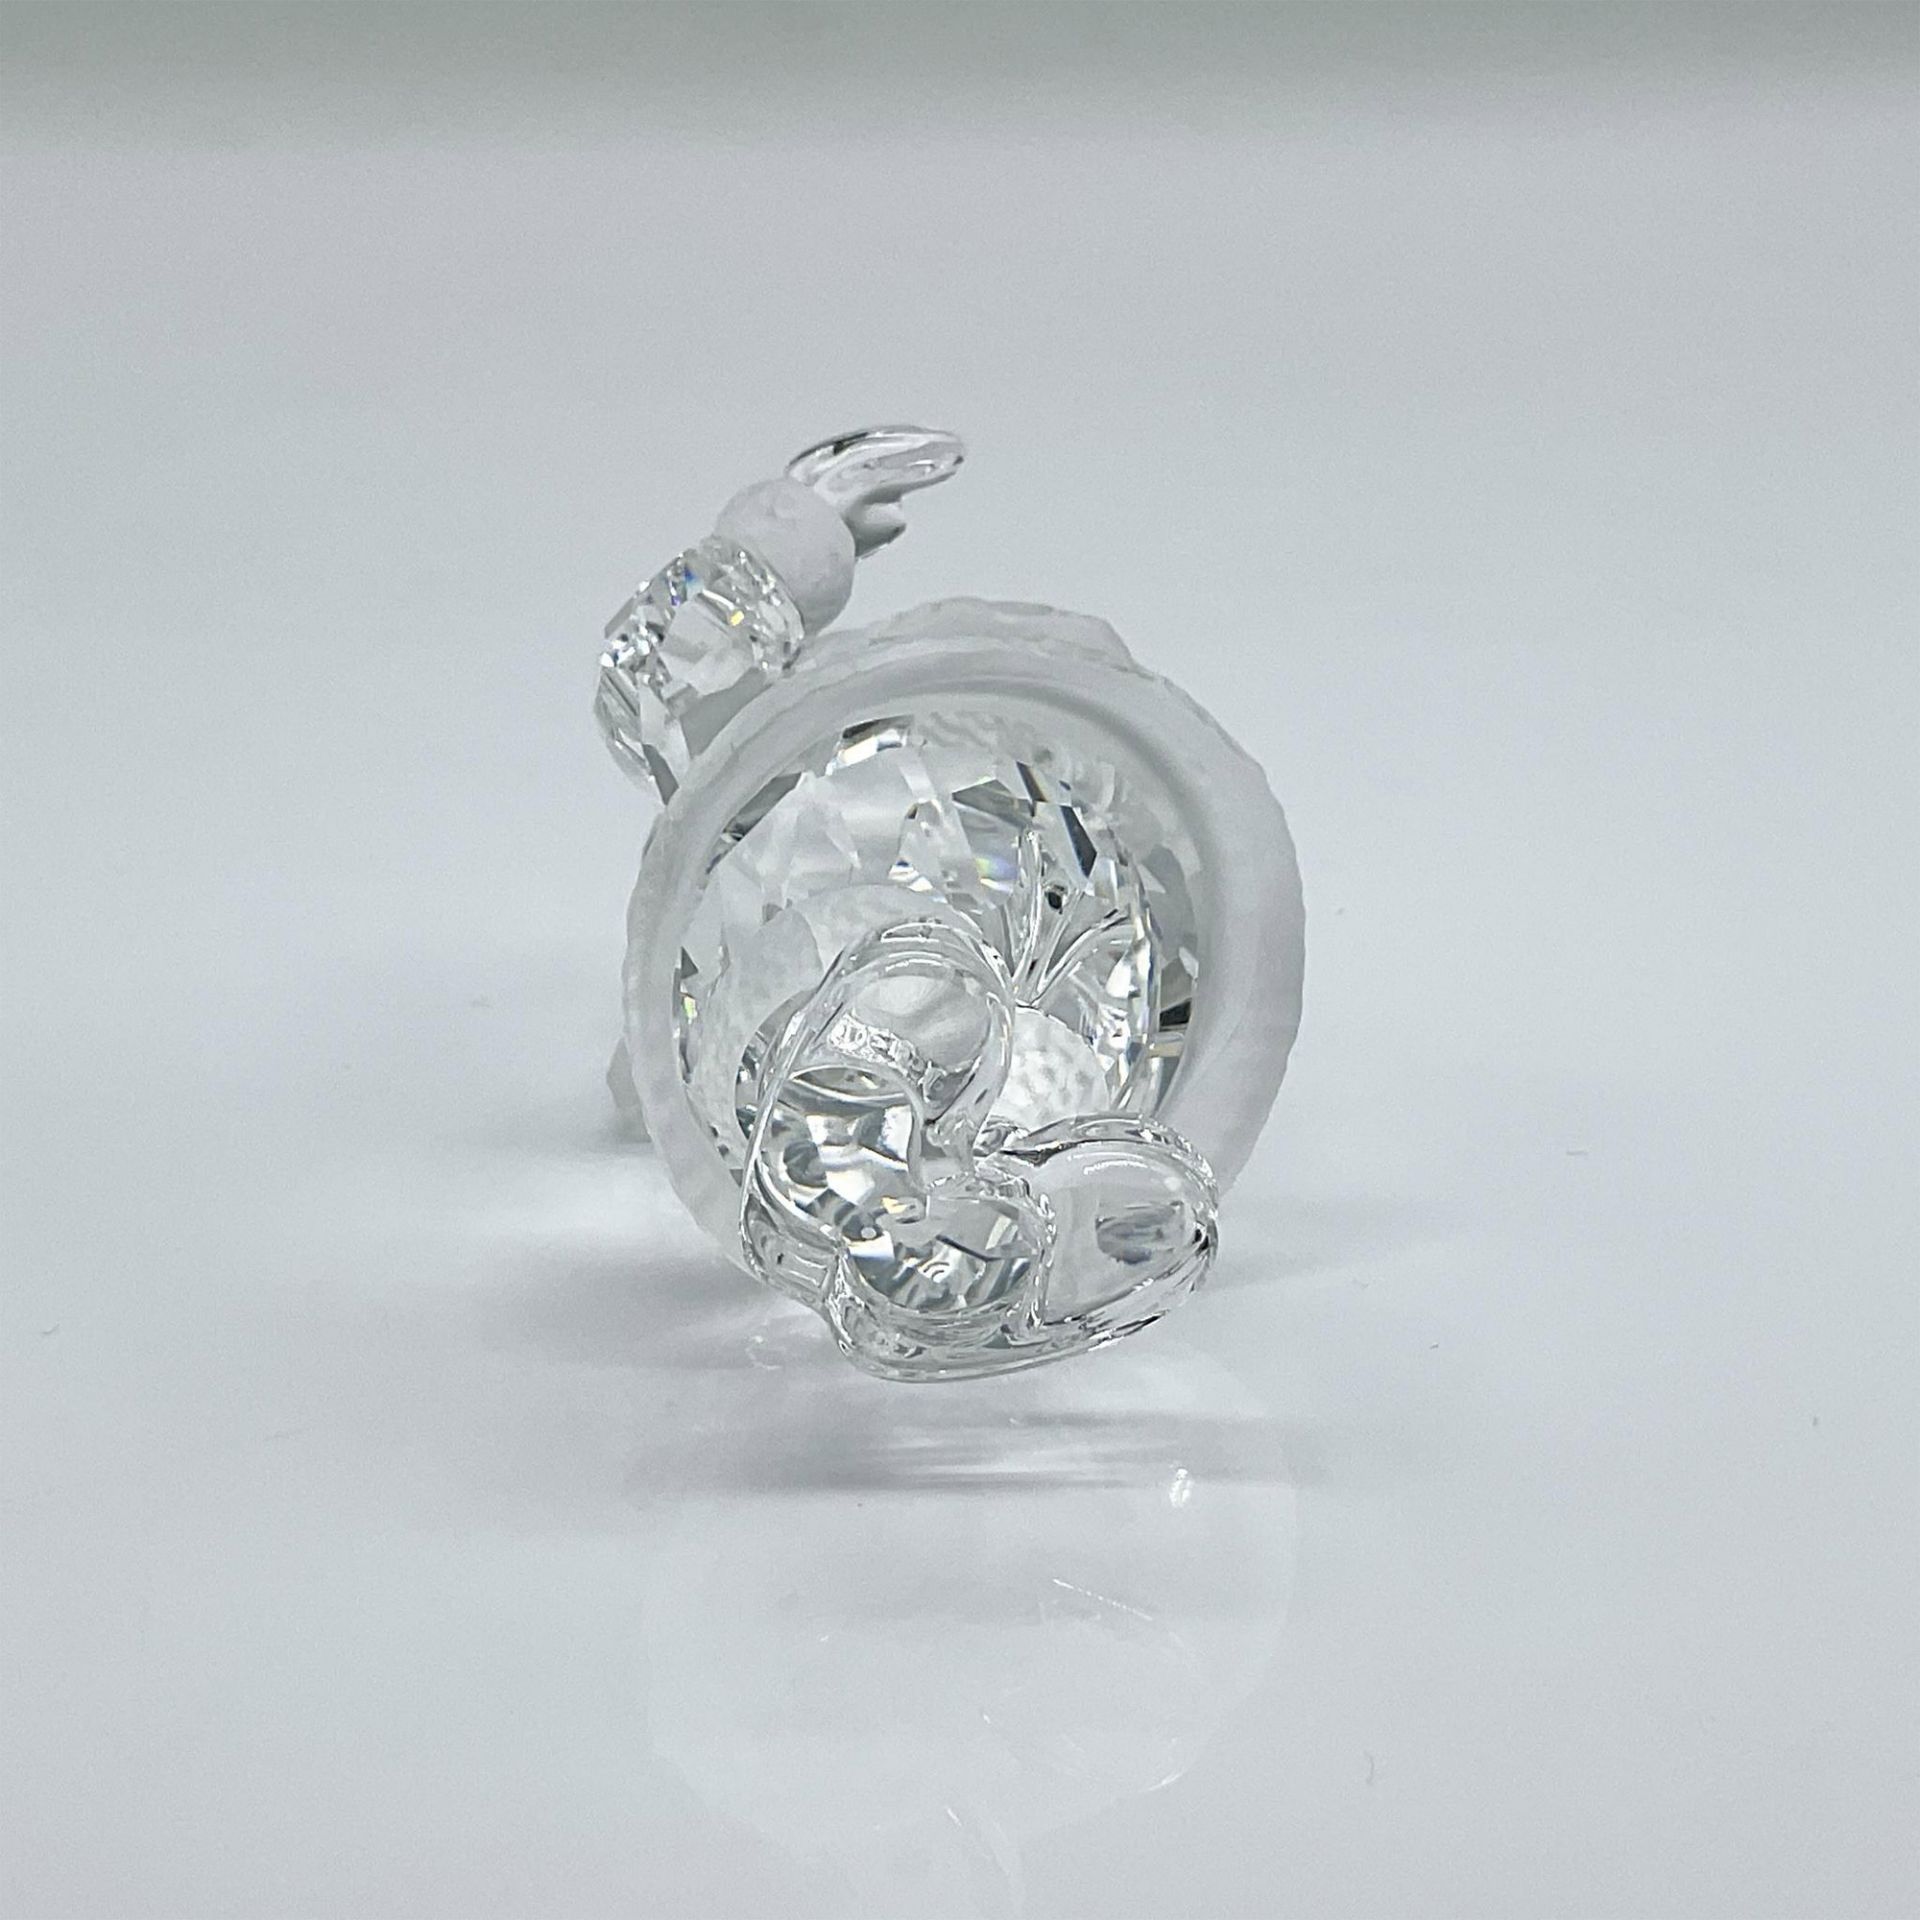 Swarovski Silver Crystal Figurine, Santa Claus - Image 3 of 4